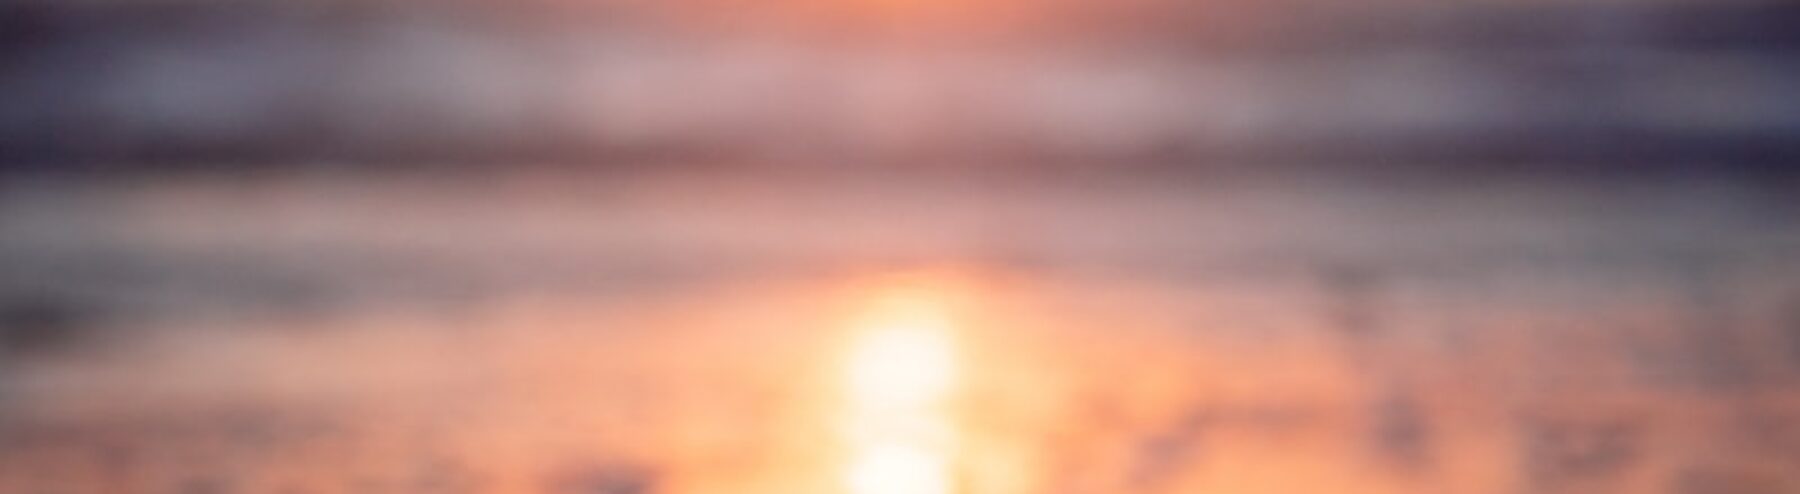 reflection of sunset on beachshore